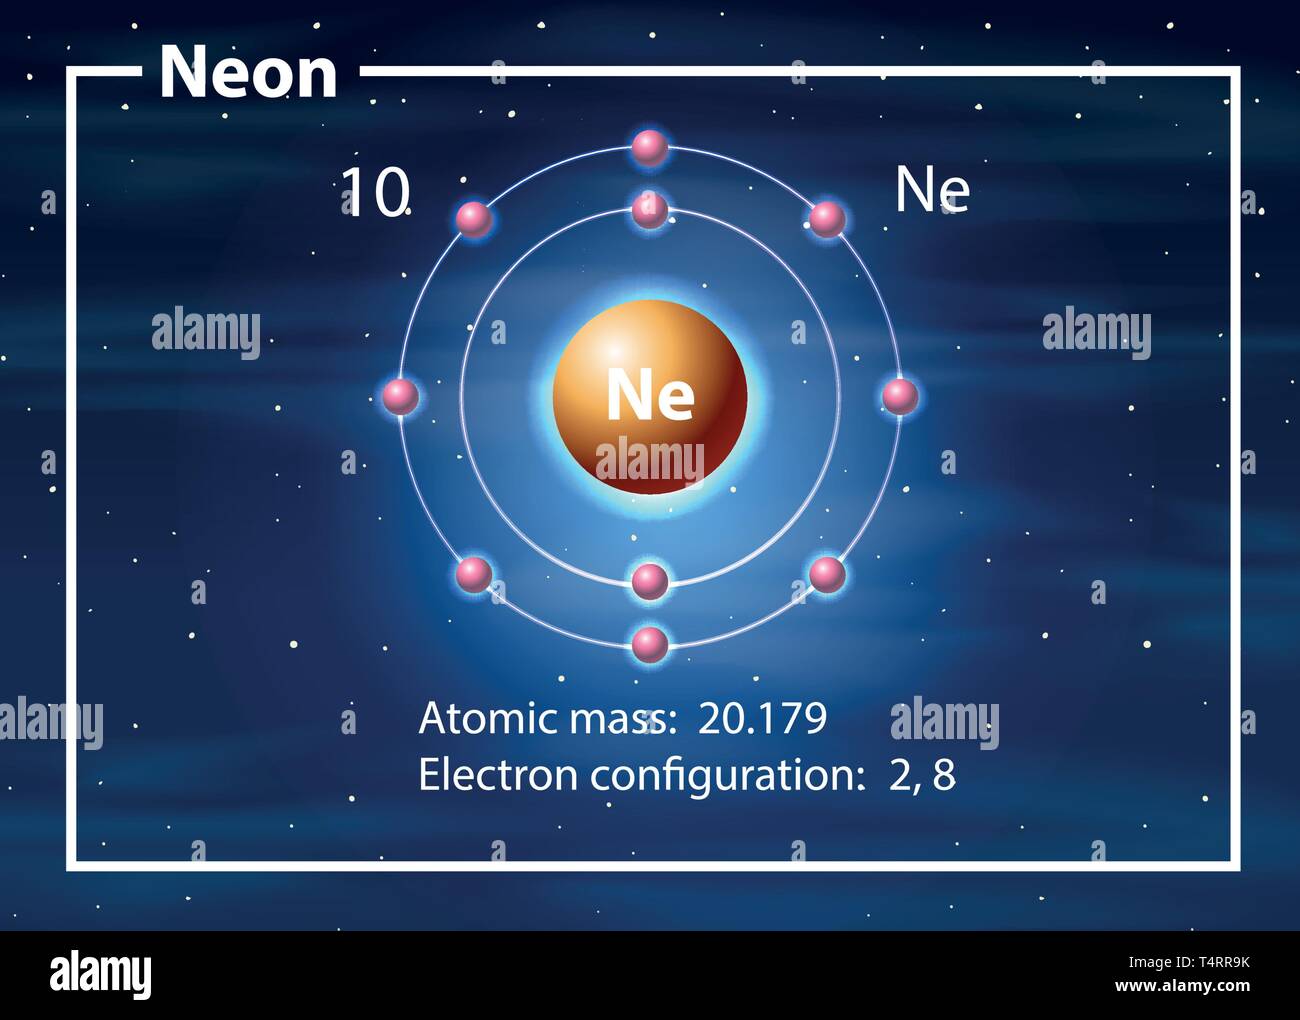 Neon atom diagram concept illustration Stock Vector